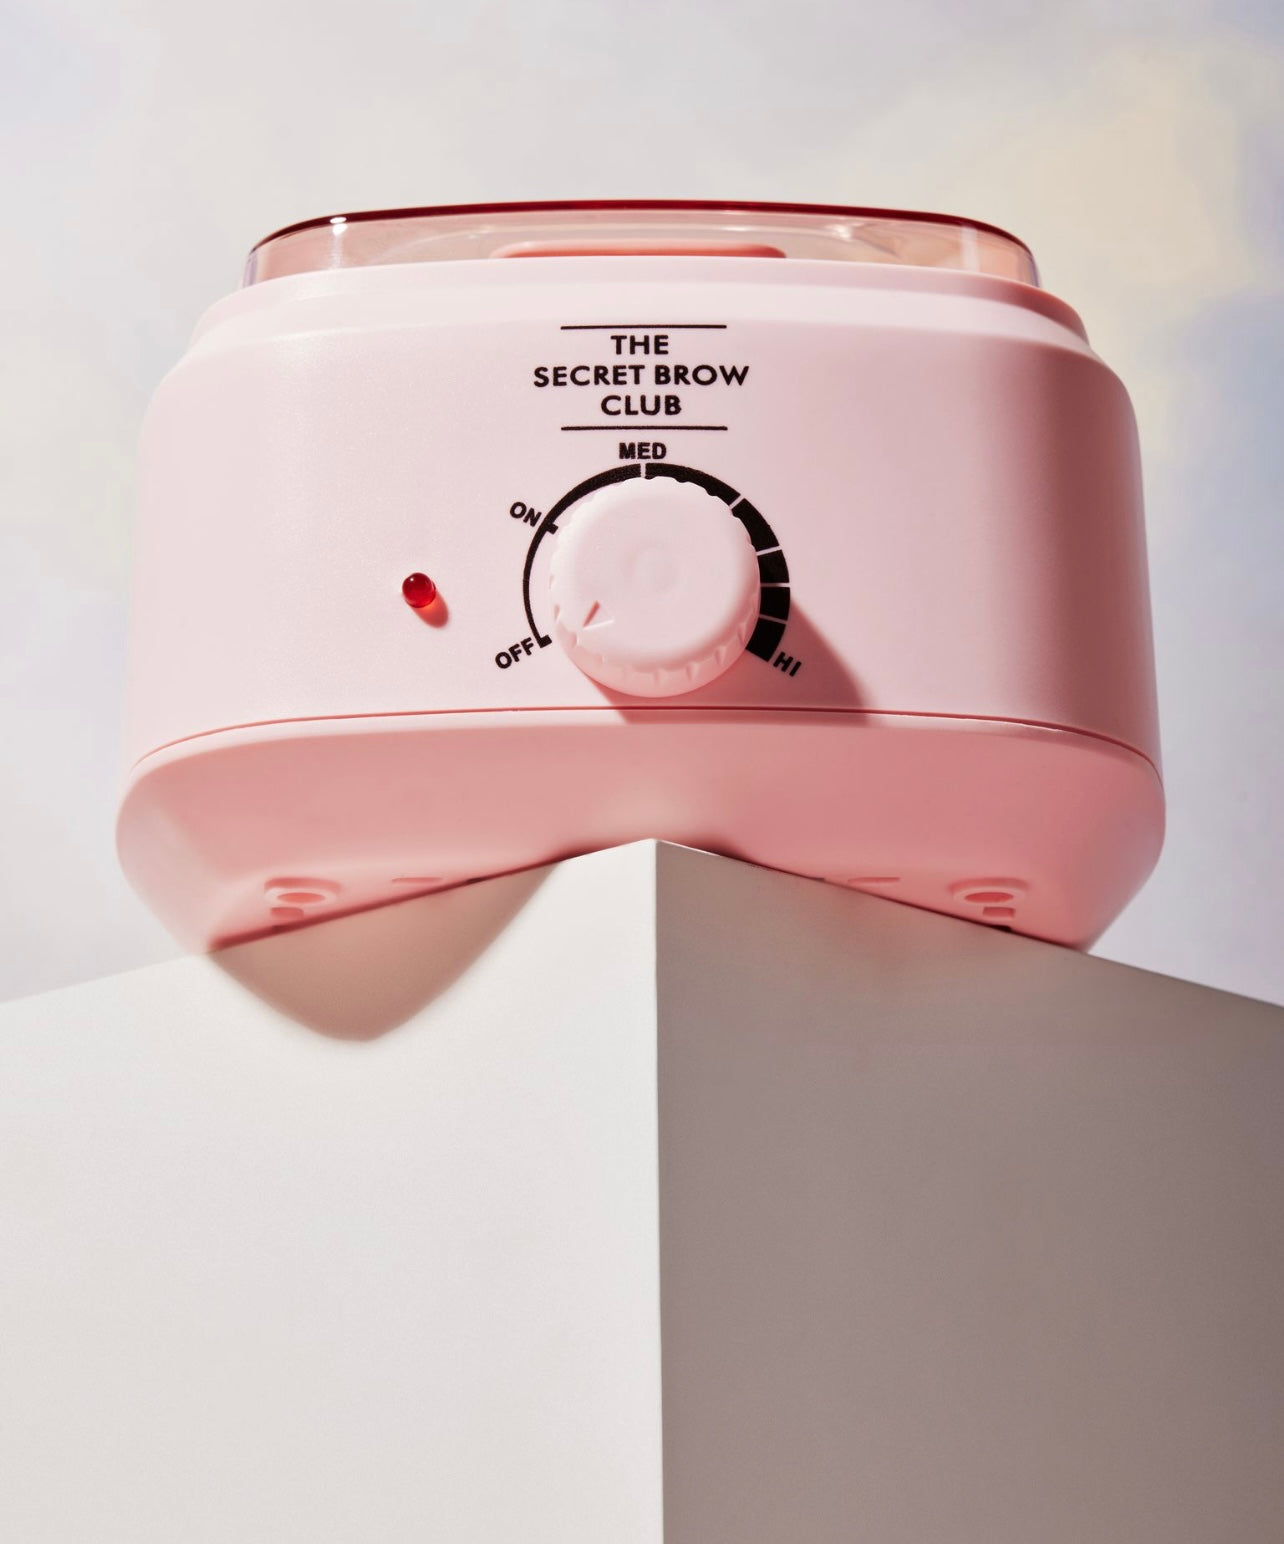 Baby Pink Wax Heater